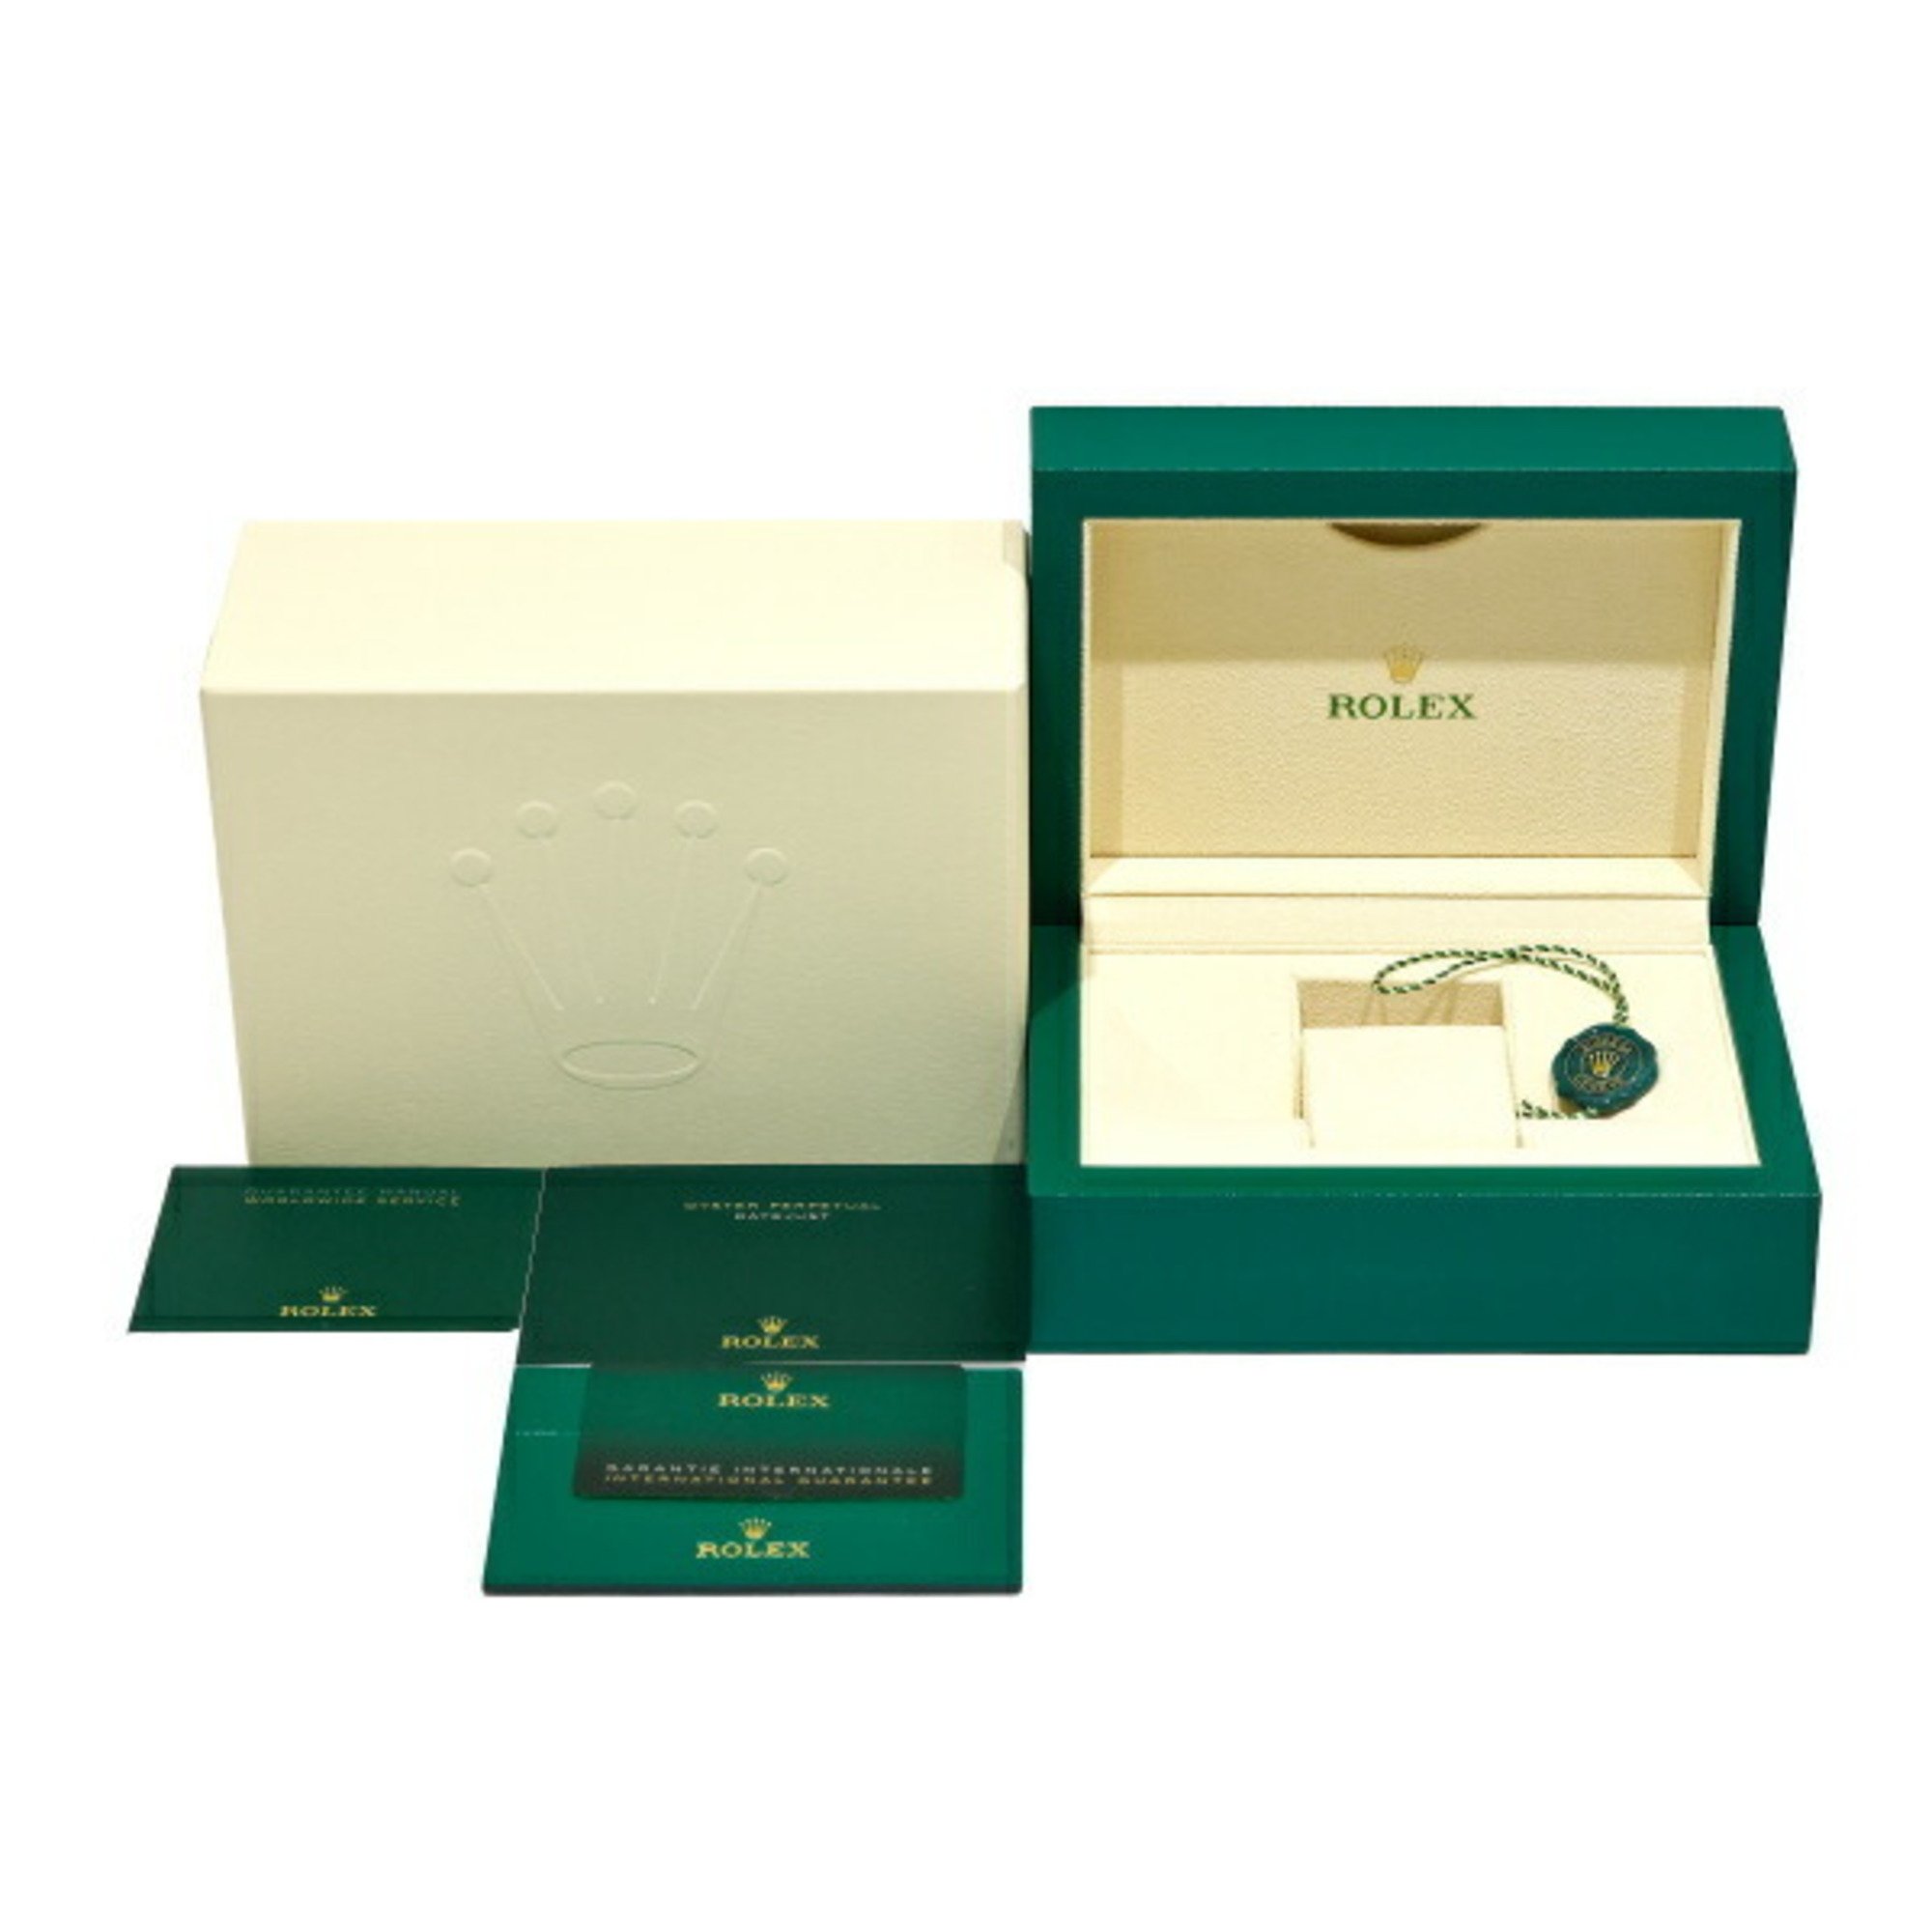 Rolex ROLEX Datejust 36 Olive Green Diamond Palm Motif 126234G Dial Men's Watch